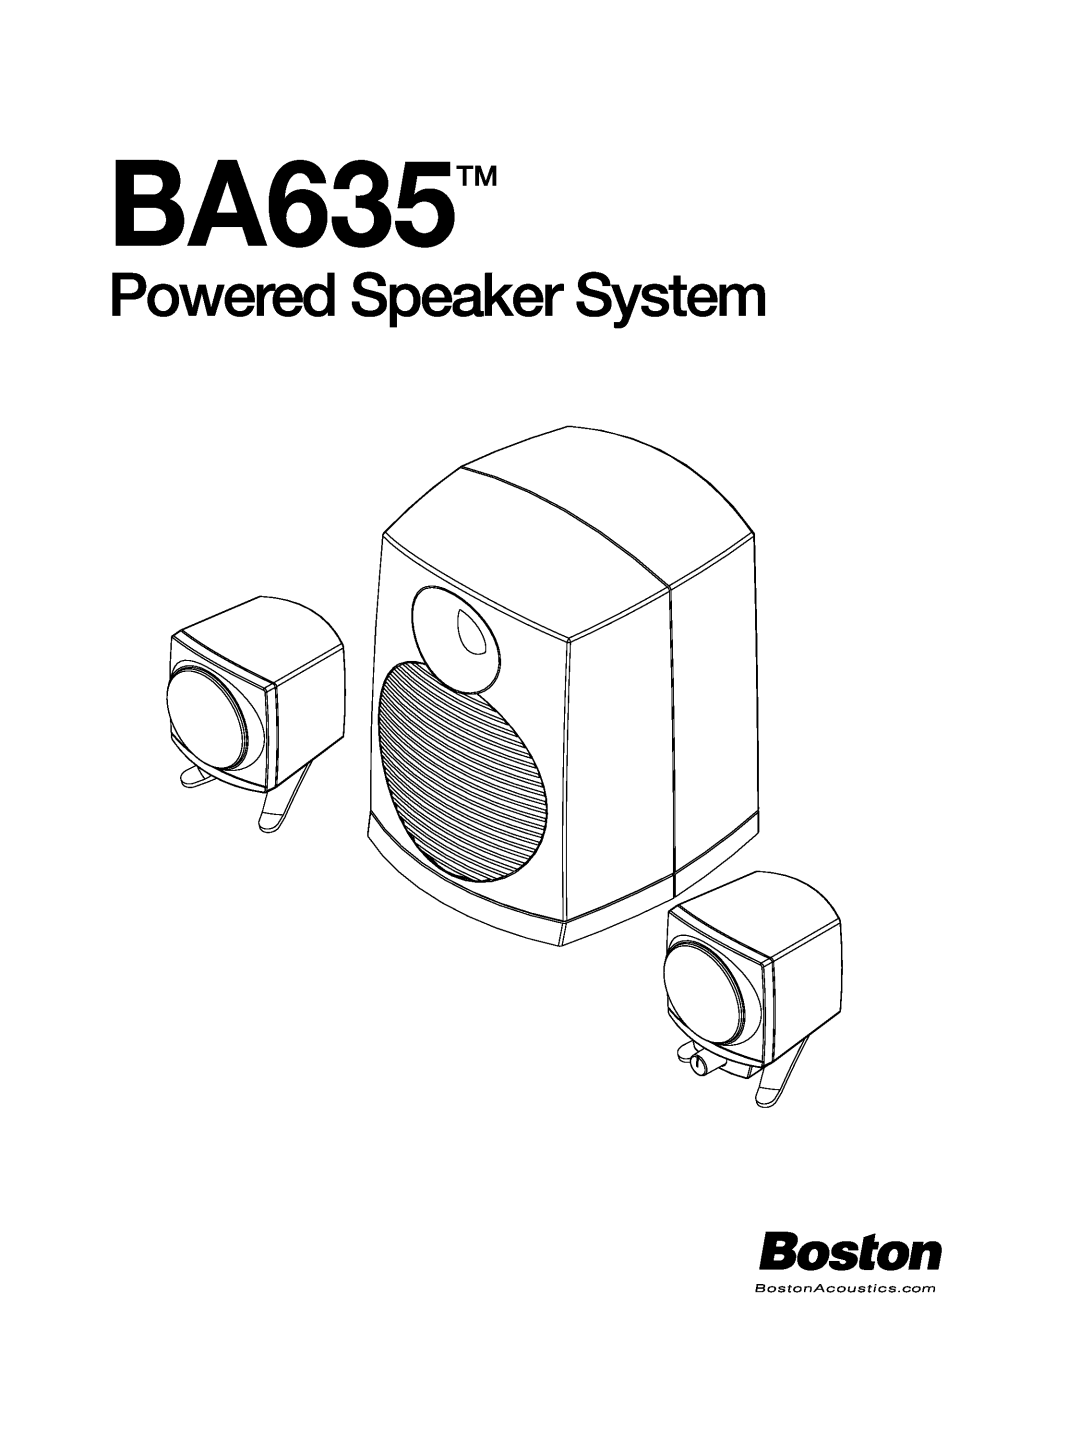 Boston Acoustics manual BA635TM, Powered Speaker System 